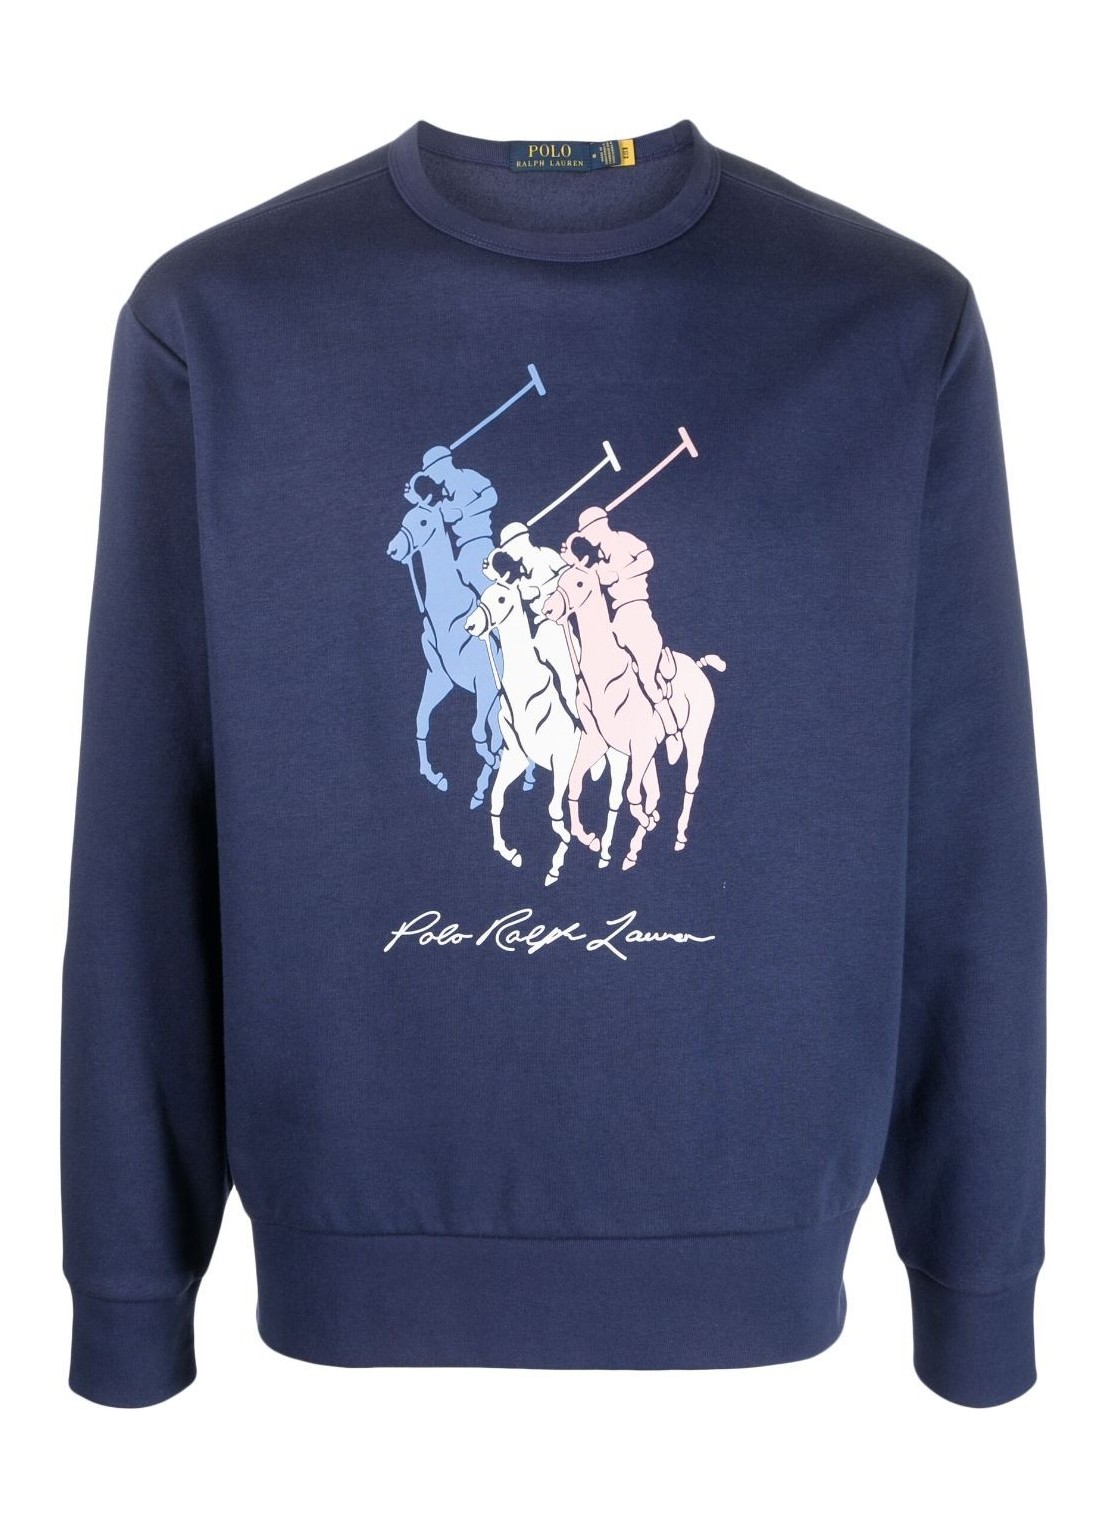 Sudadera polo ralph lauren sweater man lscnm5-long sleeve-sweatshirt 710909590001 boathouse navy tal